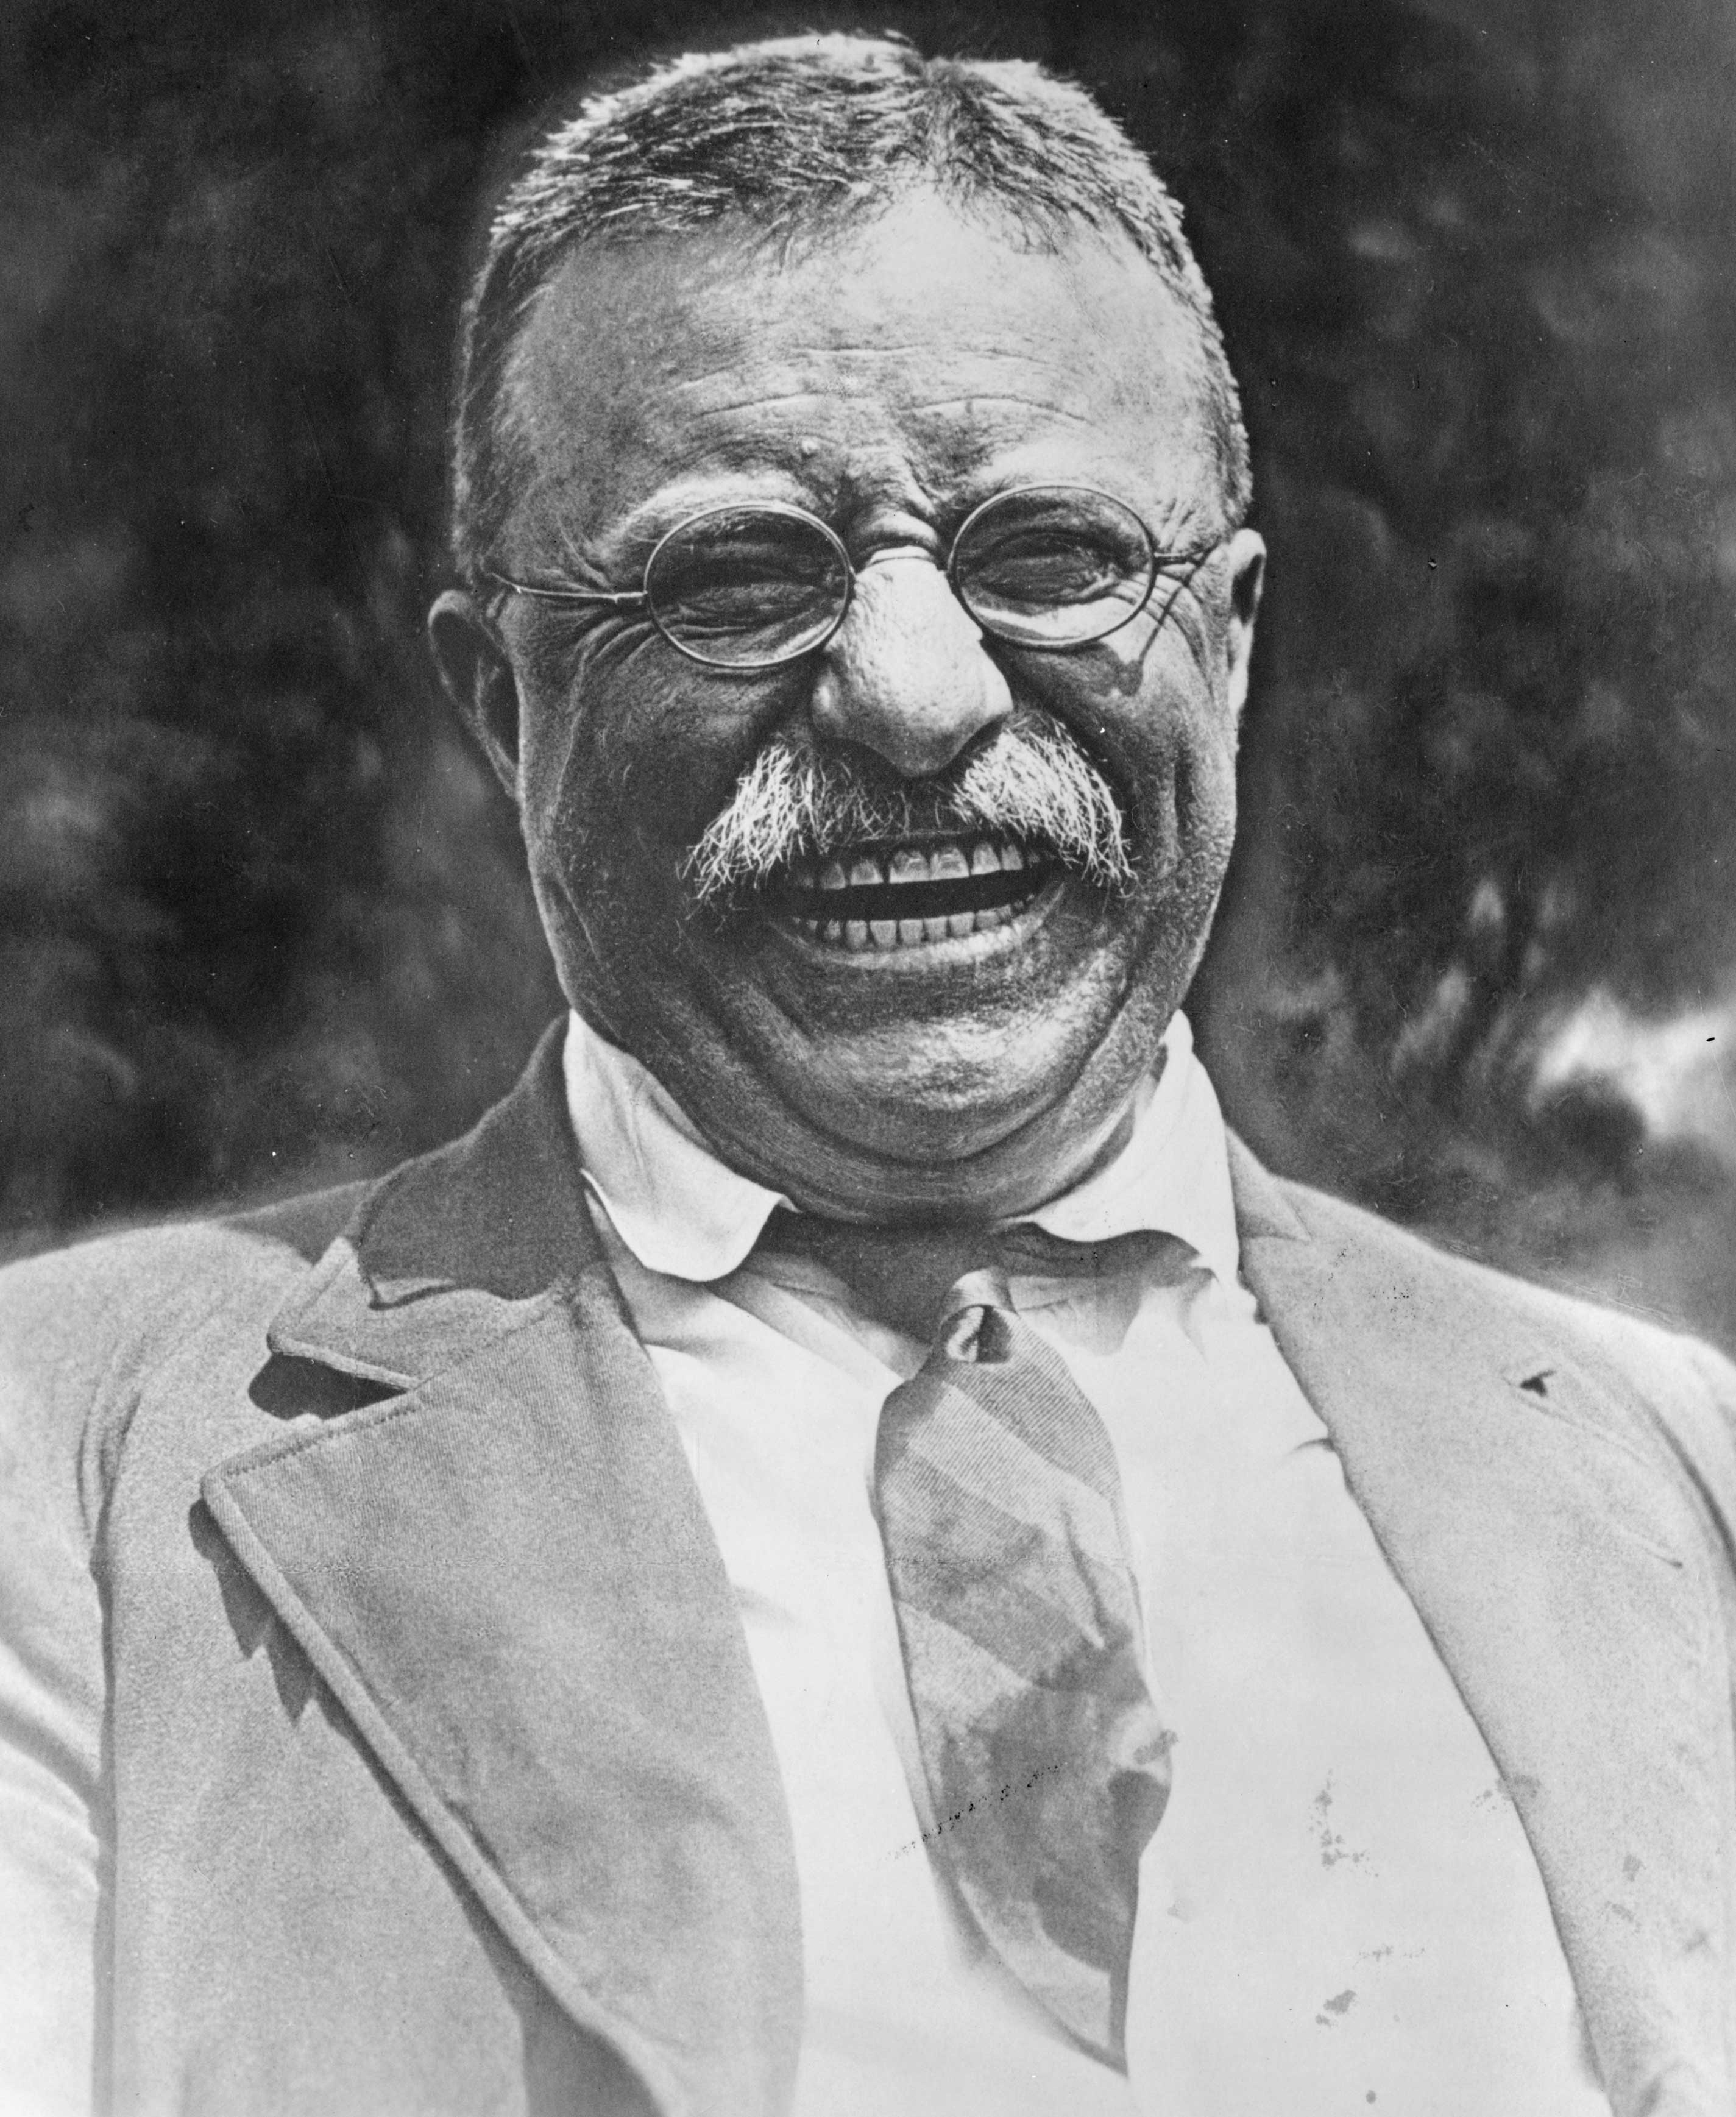 Theodore_Roosevelt_laughing.jpg